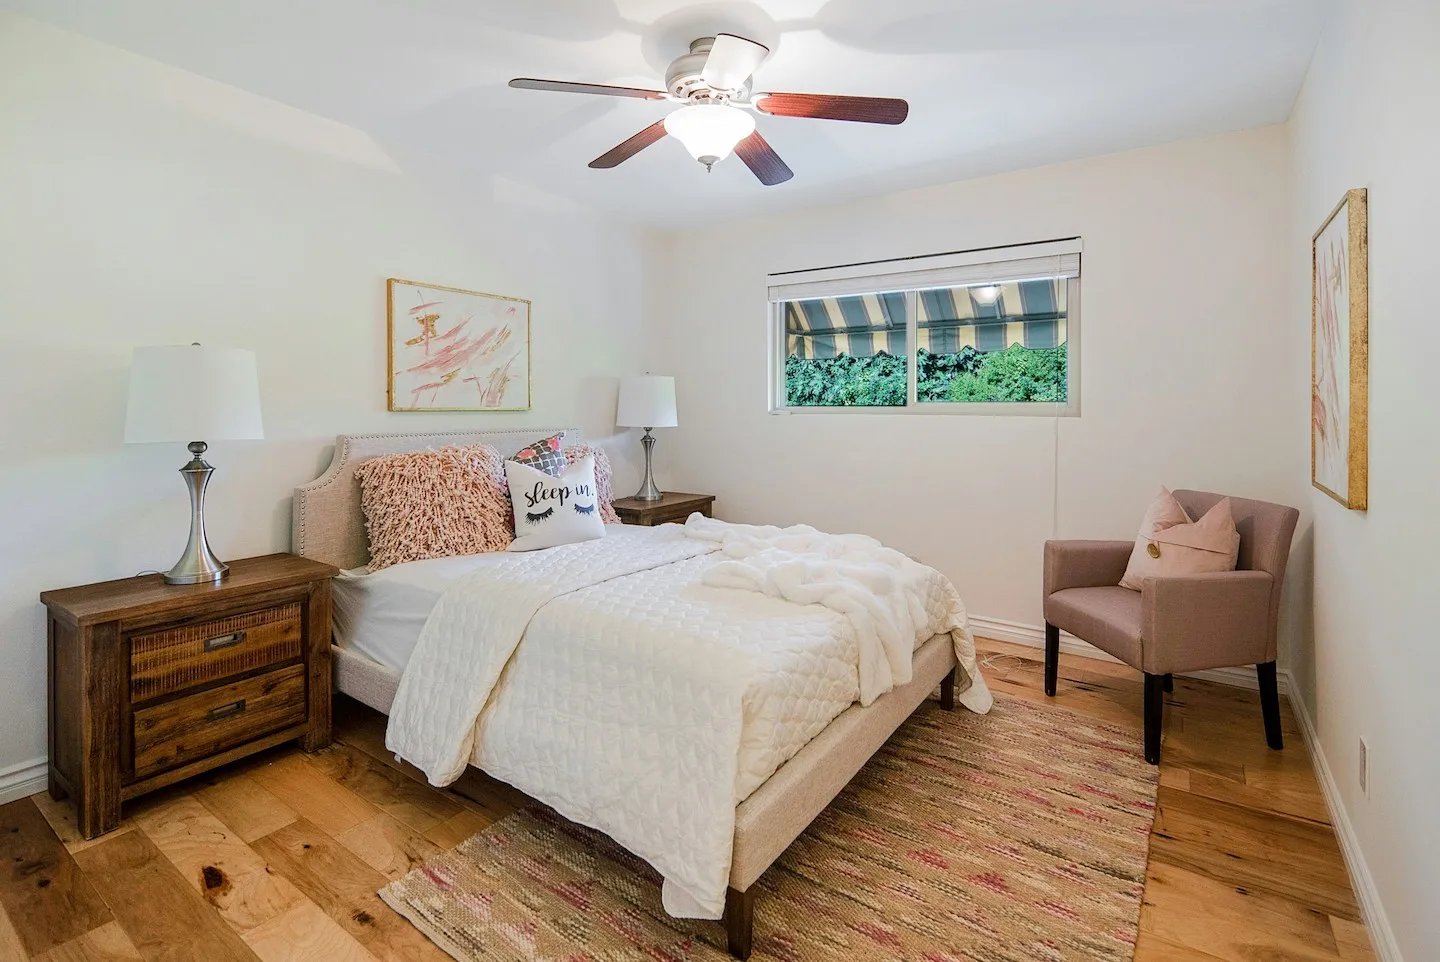 A bedroom in Lafayette, Louisiana with a dark wood ceiling fan in the summertime.